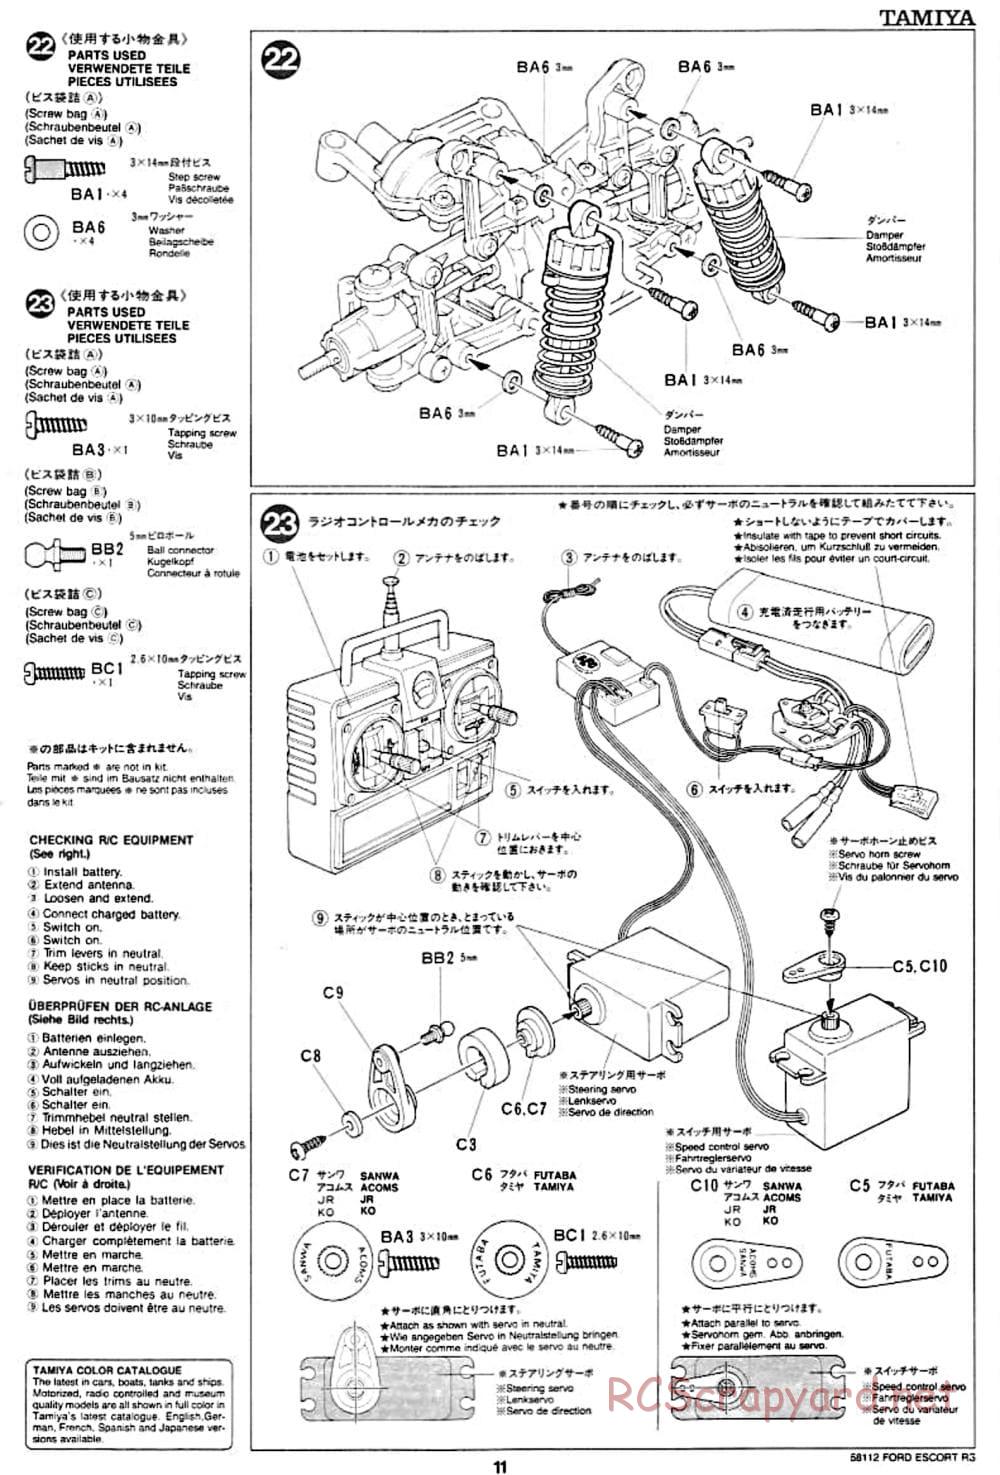 Tamiya - Ford Escort RS Cosworth - TA-01 Chassis - Manual - Page 11